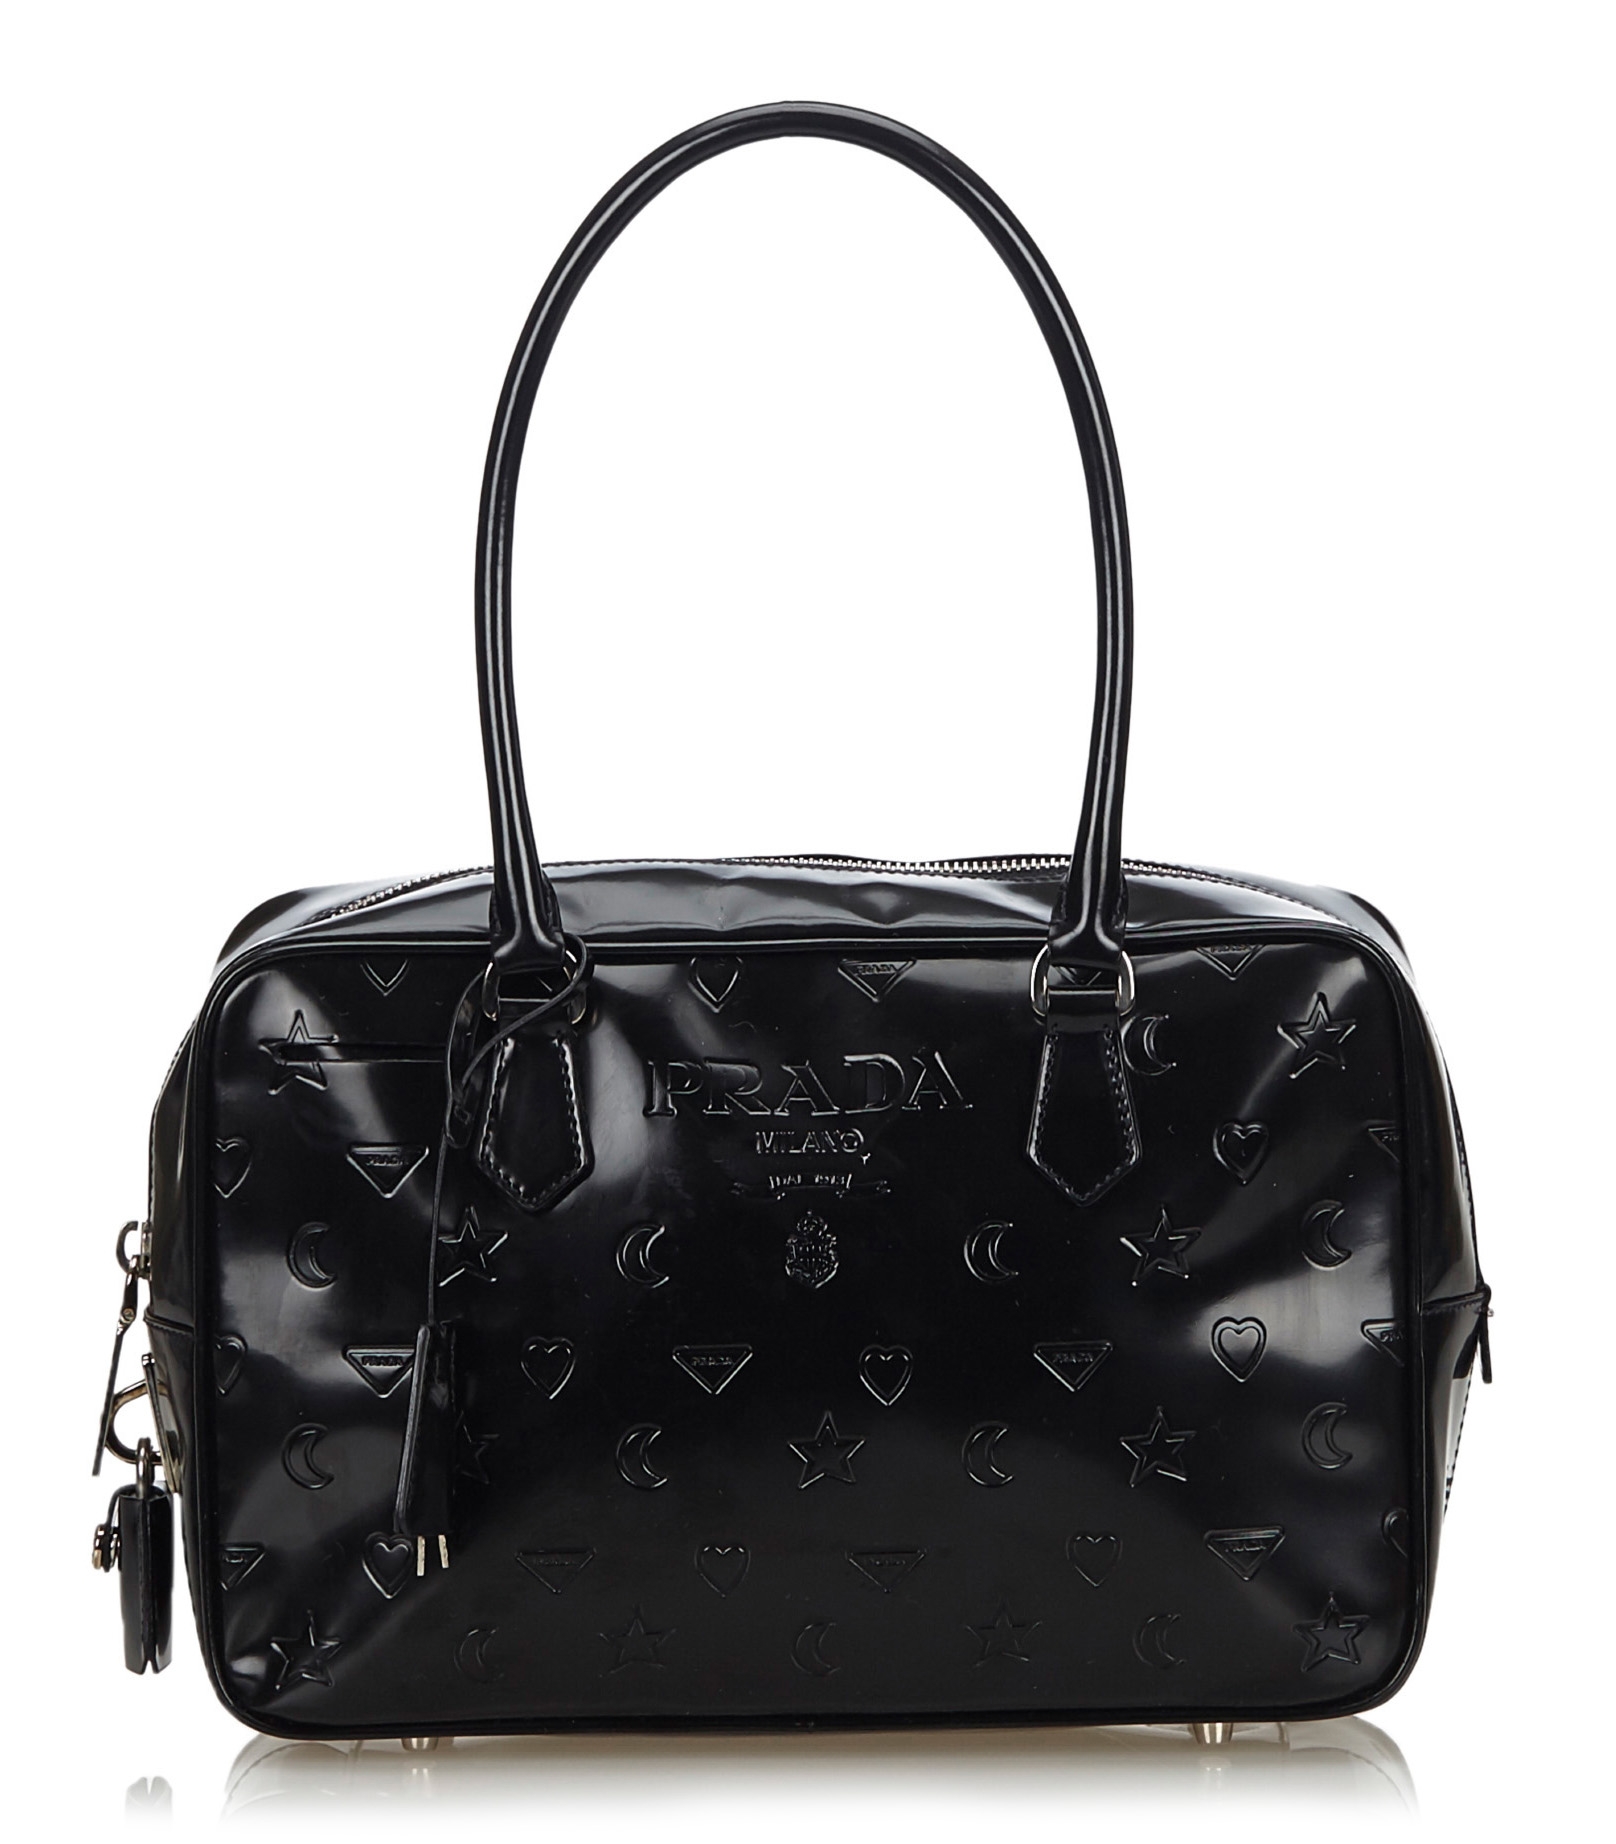 prada embossed logo leather handbag